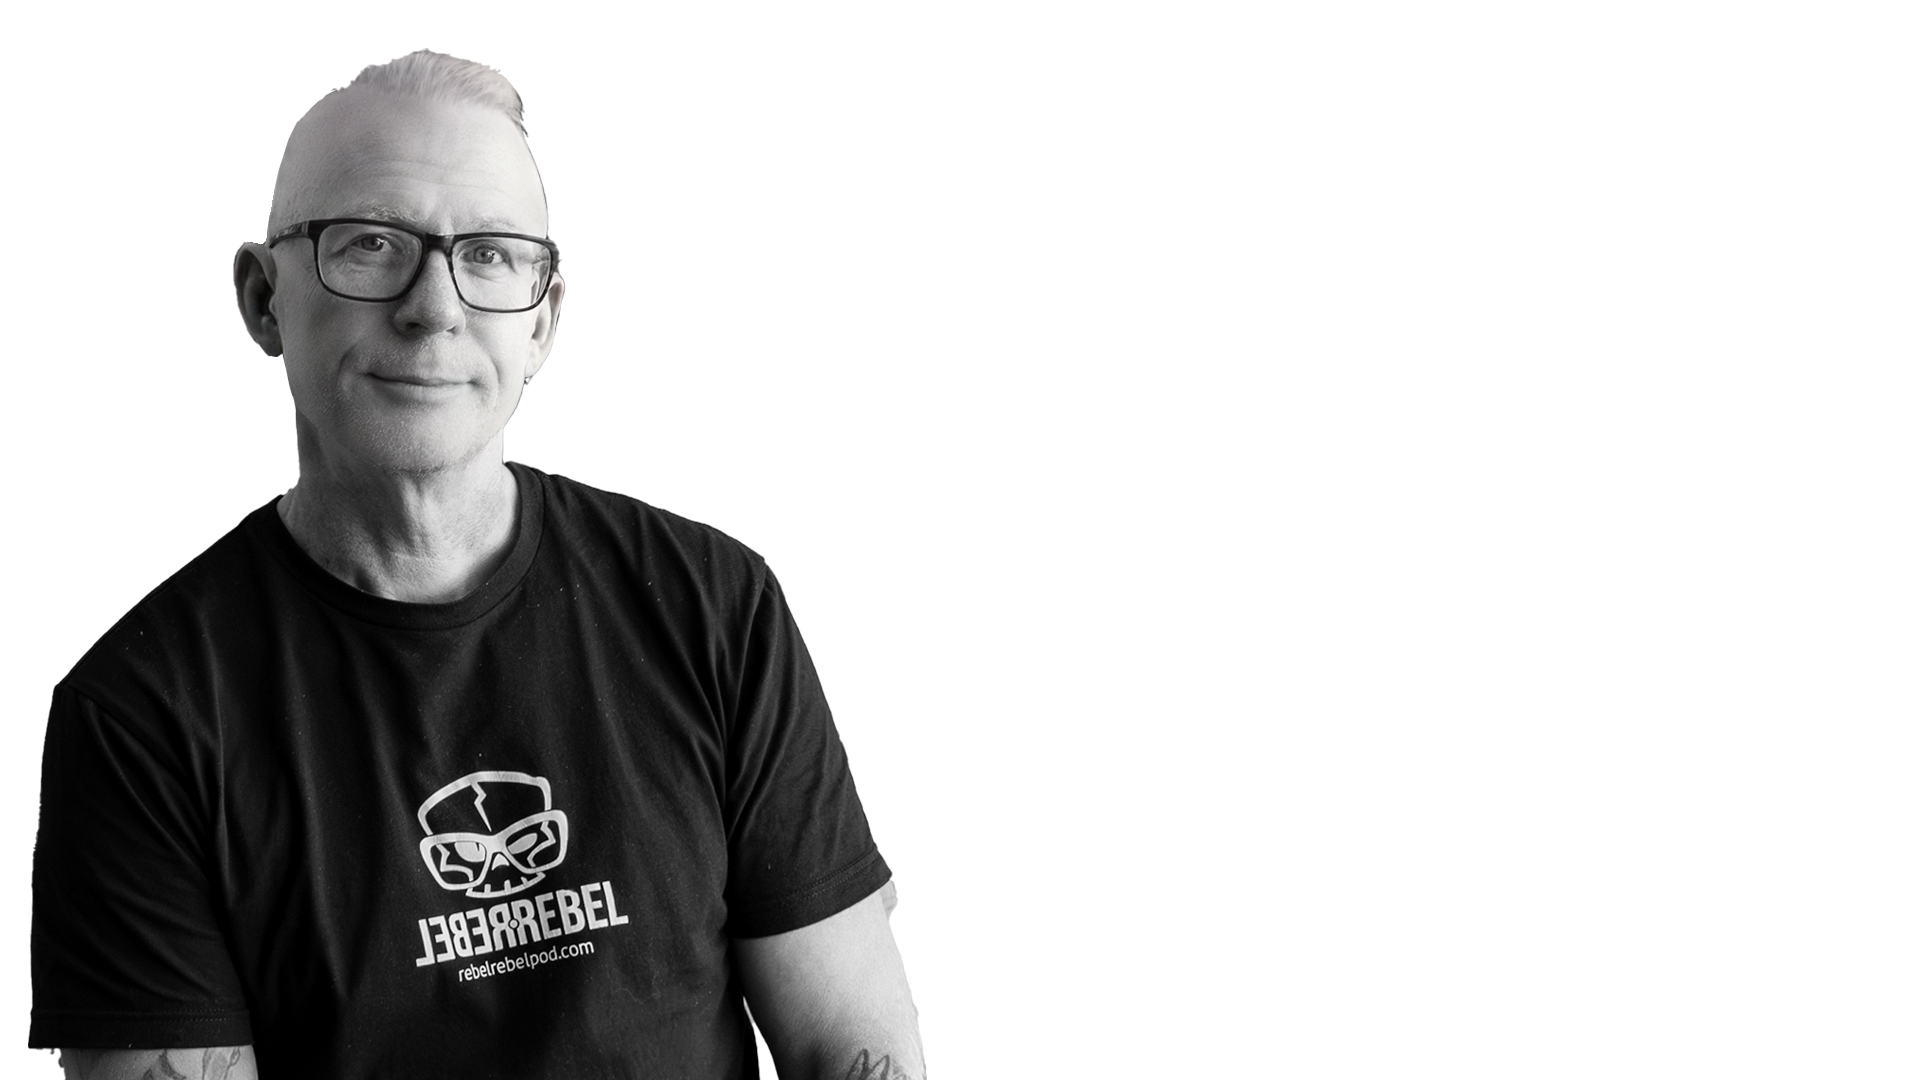 Host of the RebelRebel Podcast, Michael Dargie